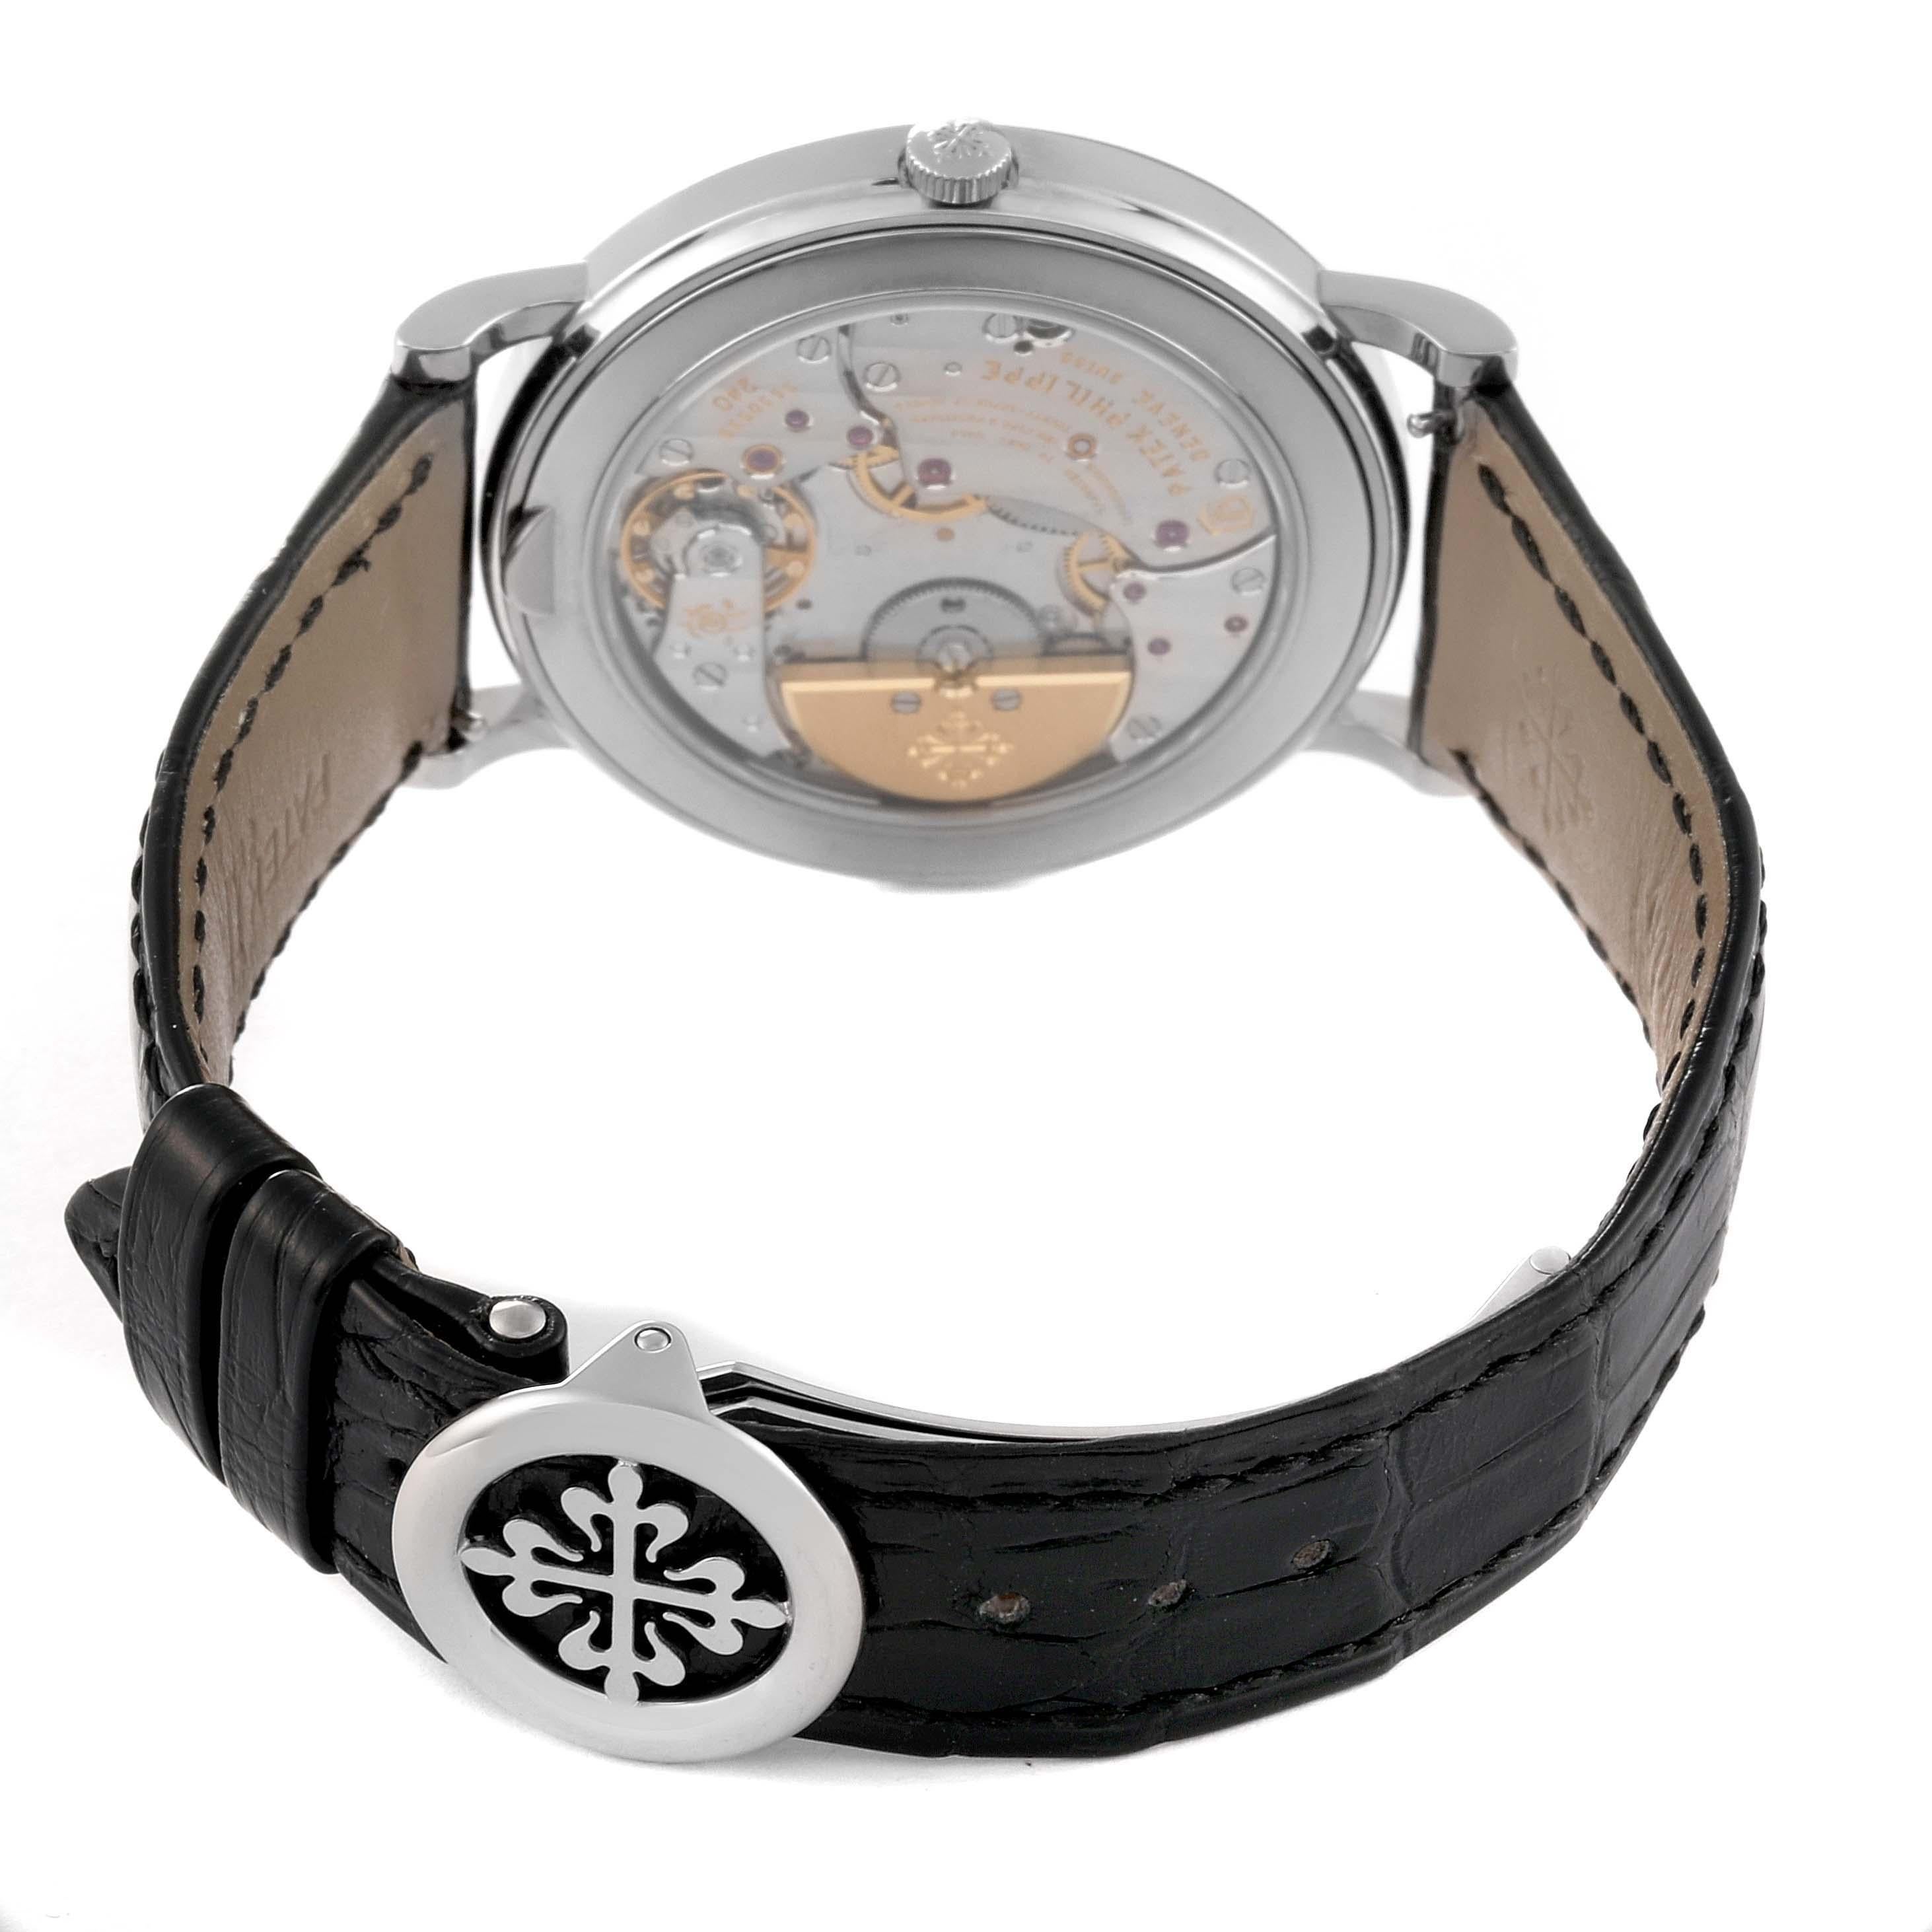 Men's Patek Philippe Grand Complications Perpetual Calendar White Gold Watch 5139G